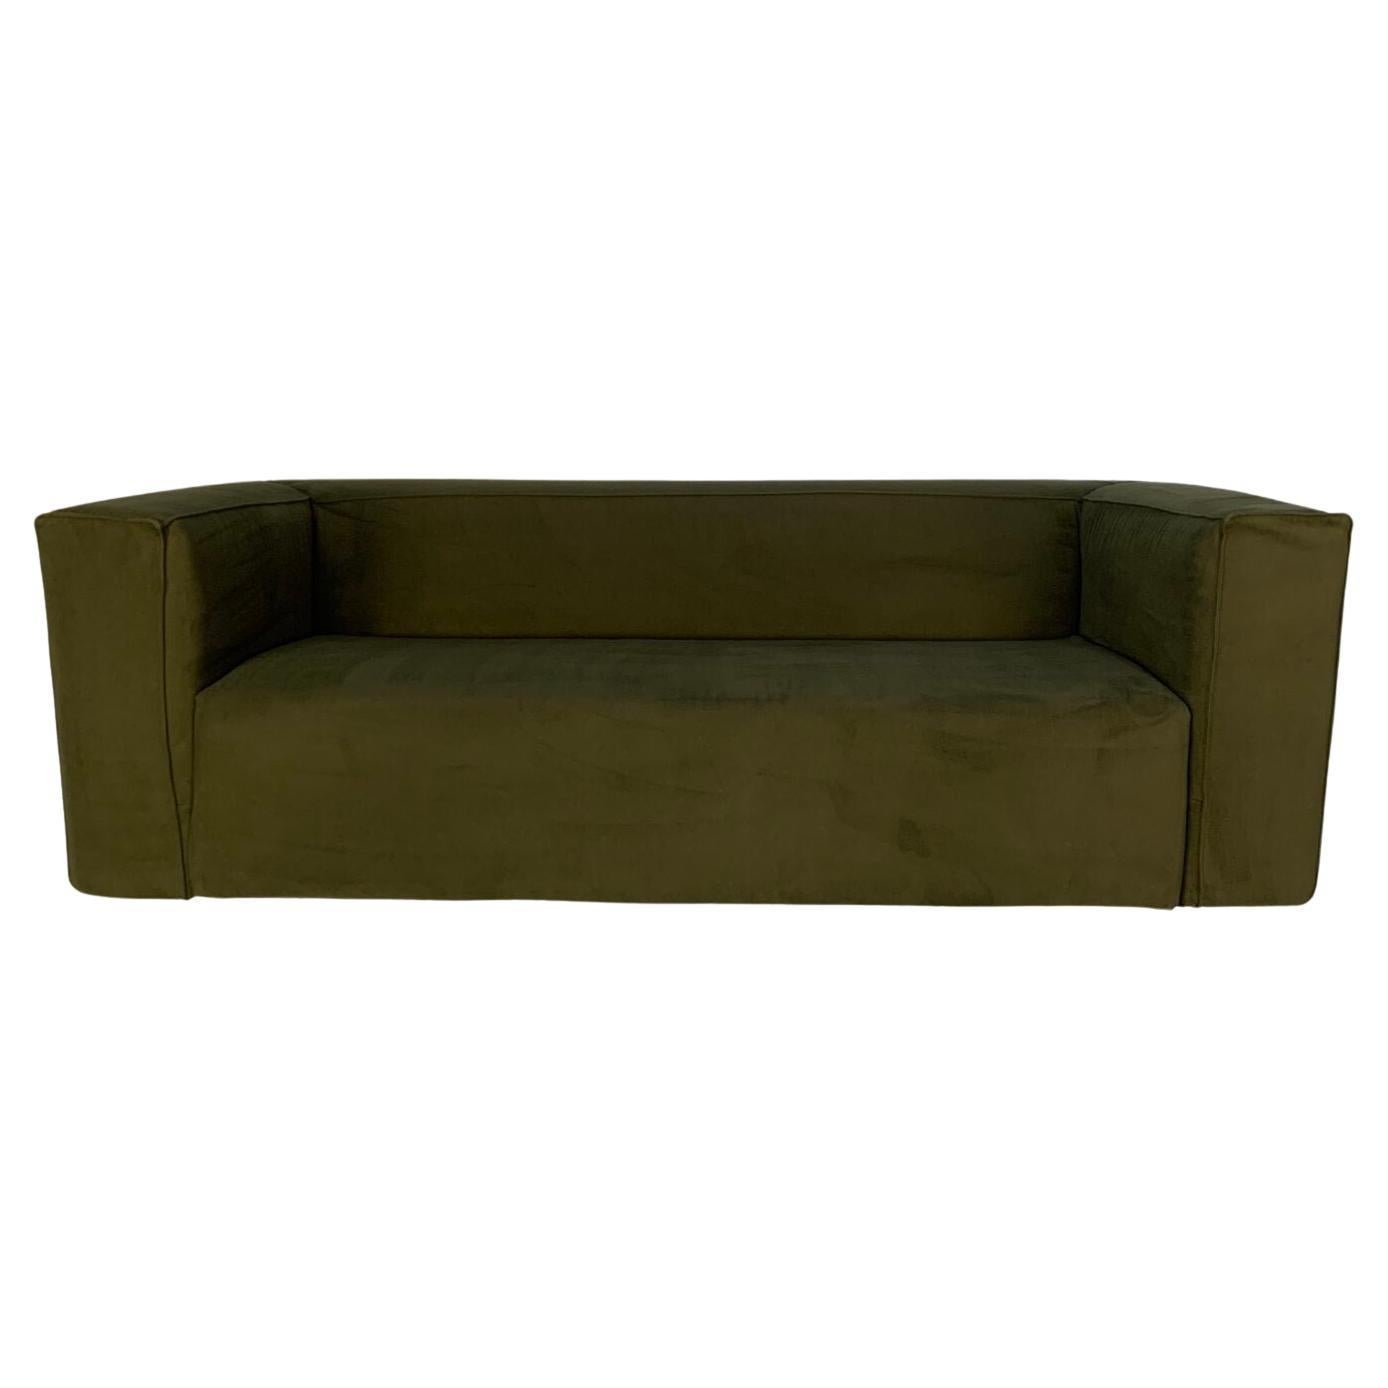 Cassina “180 Blox” 2.5 Seat Sofa – in Green Moleskin For Sale